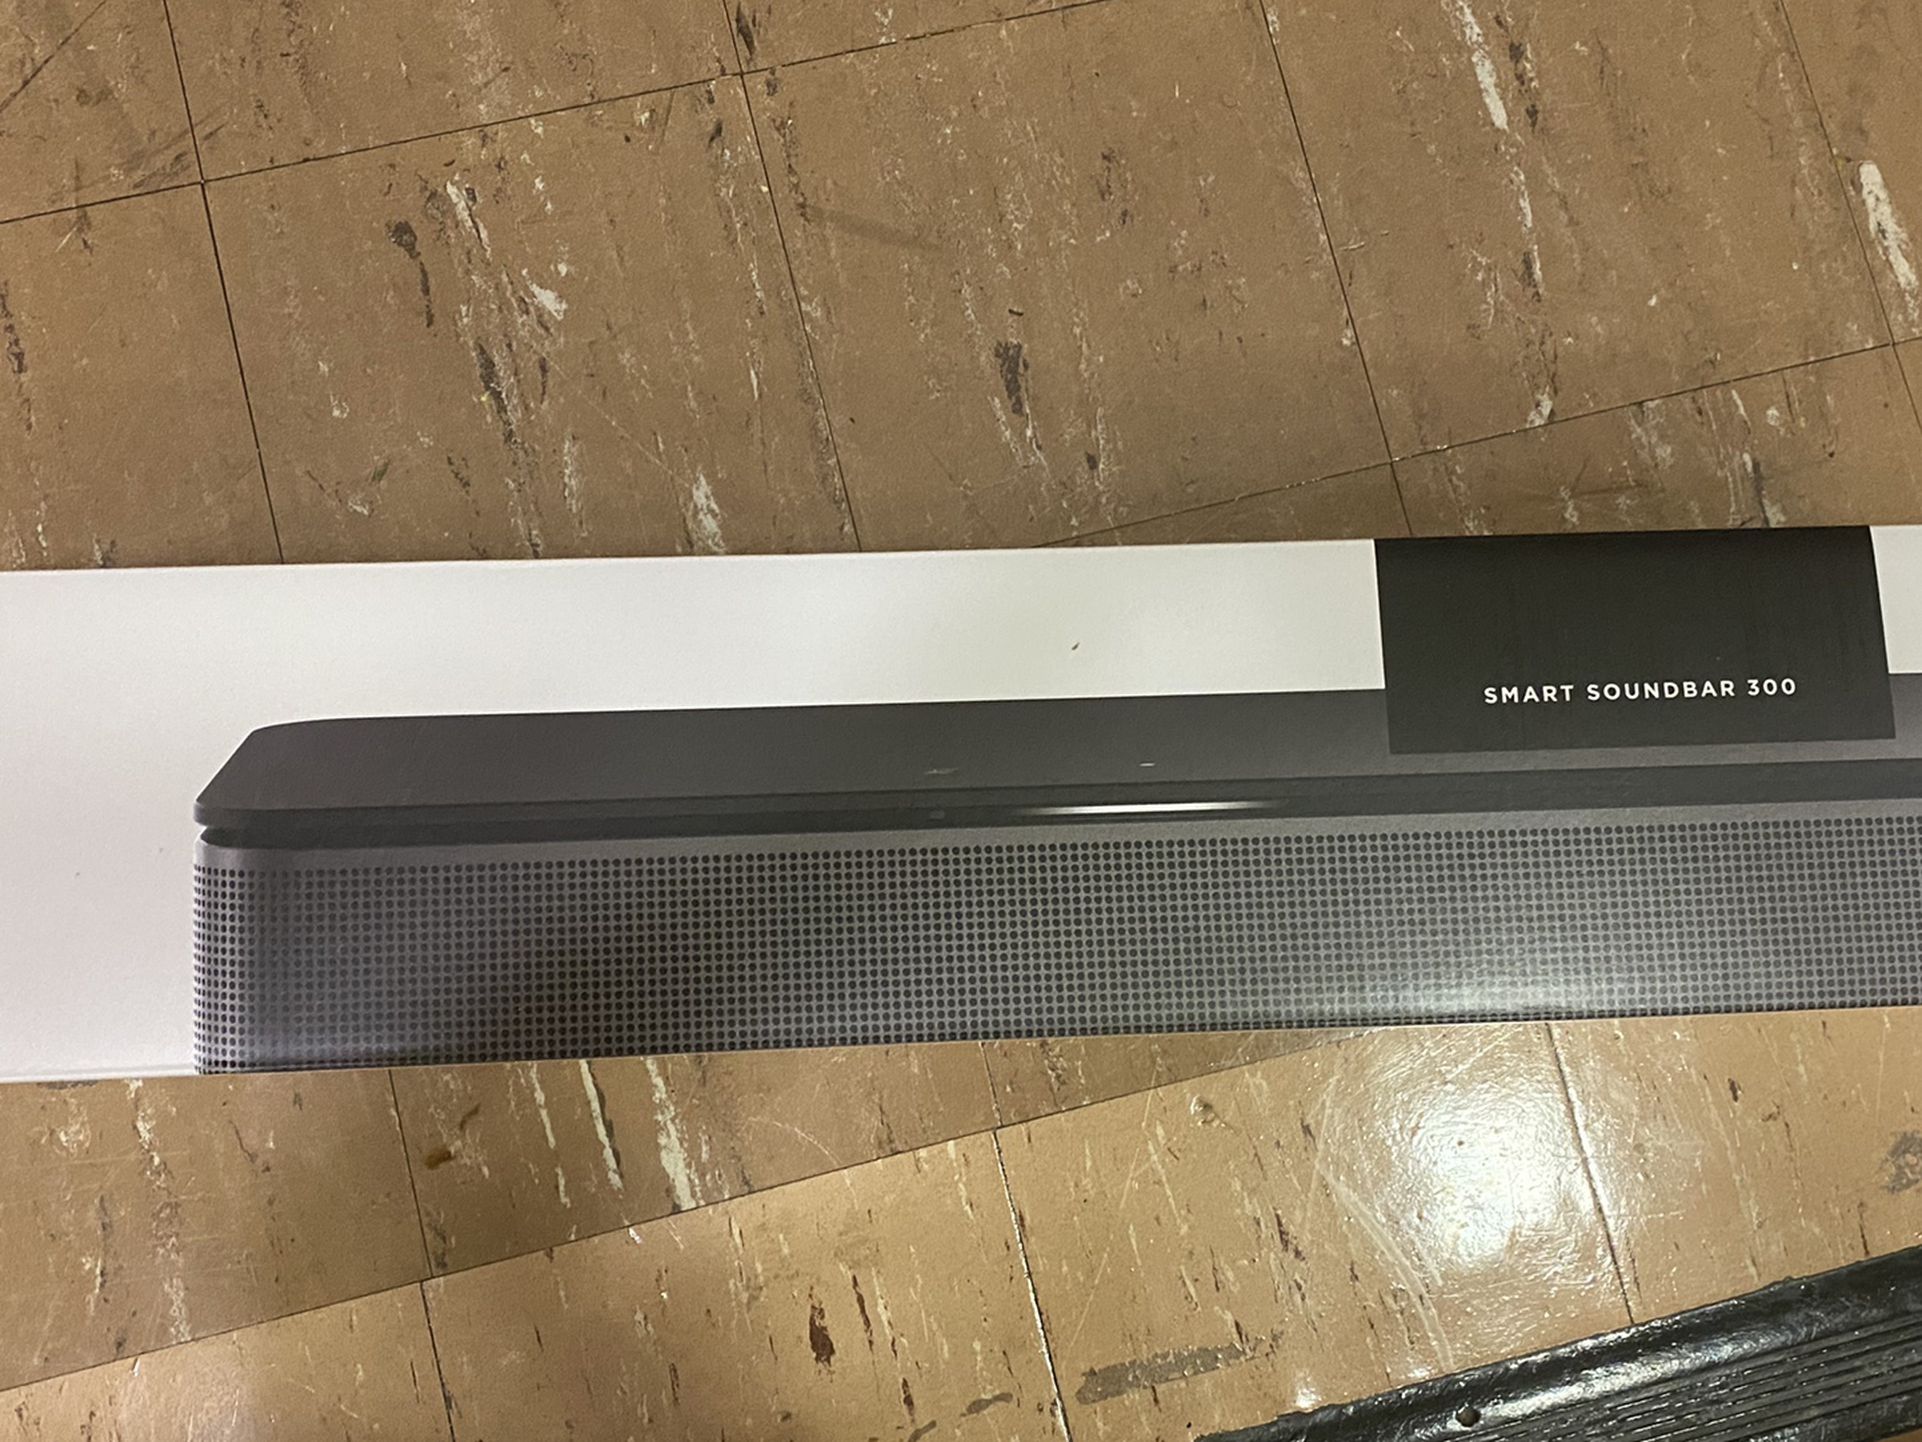 Bose - Smart Soundbar 300 - Voice Control with Bluetooth and Wi-Fi - Black